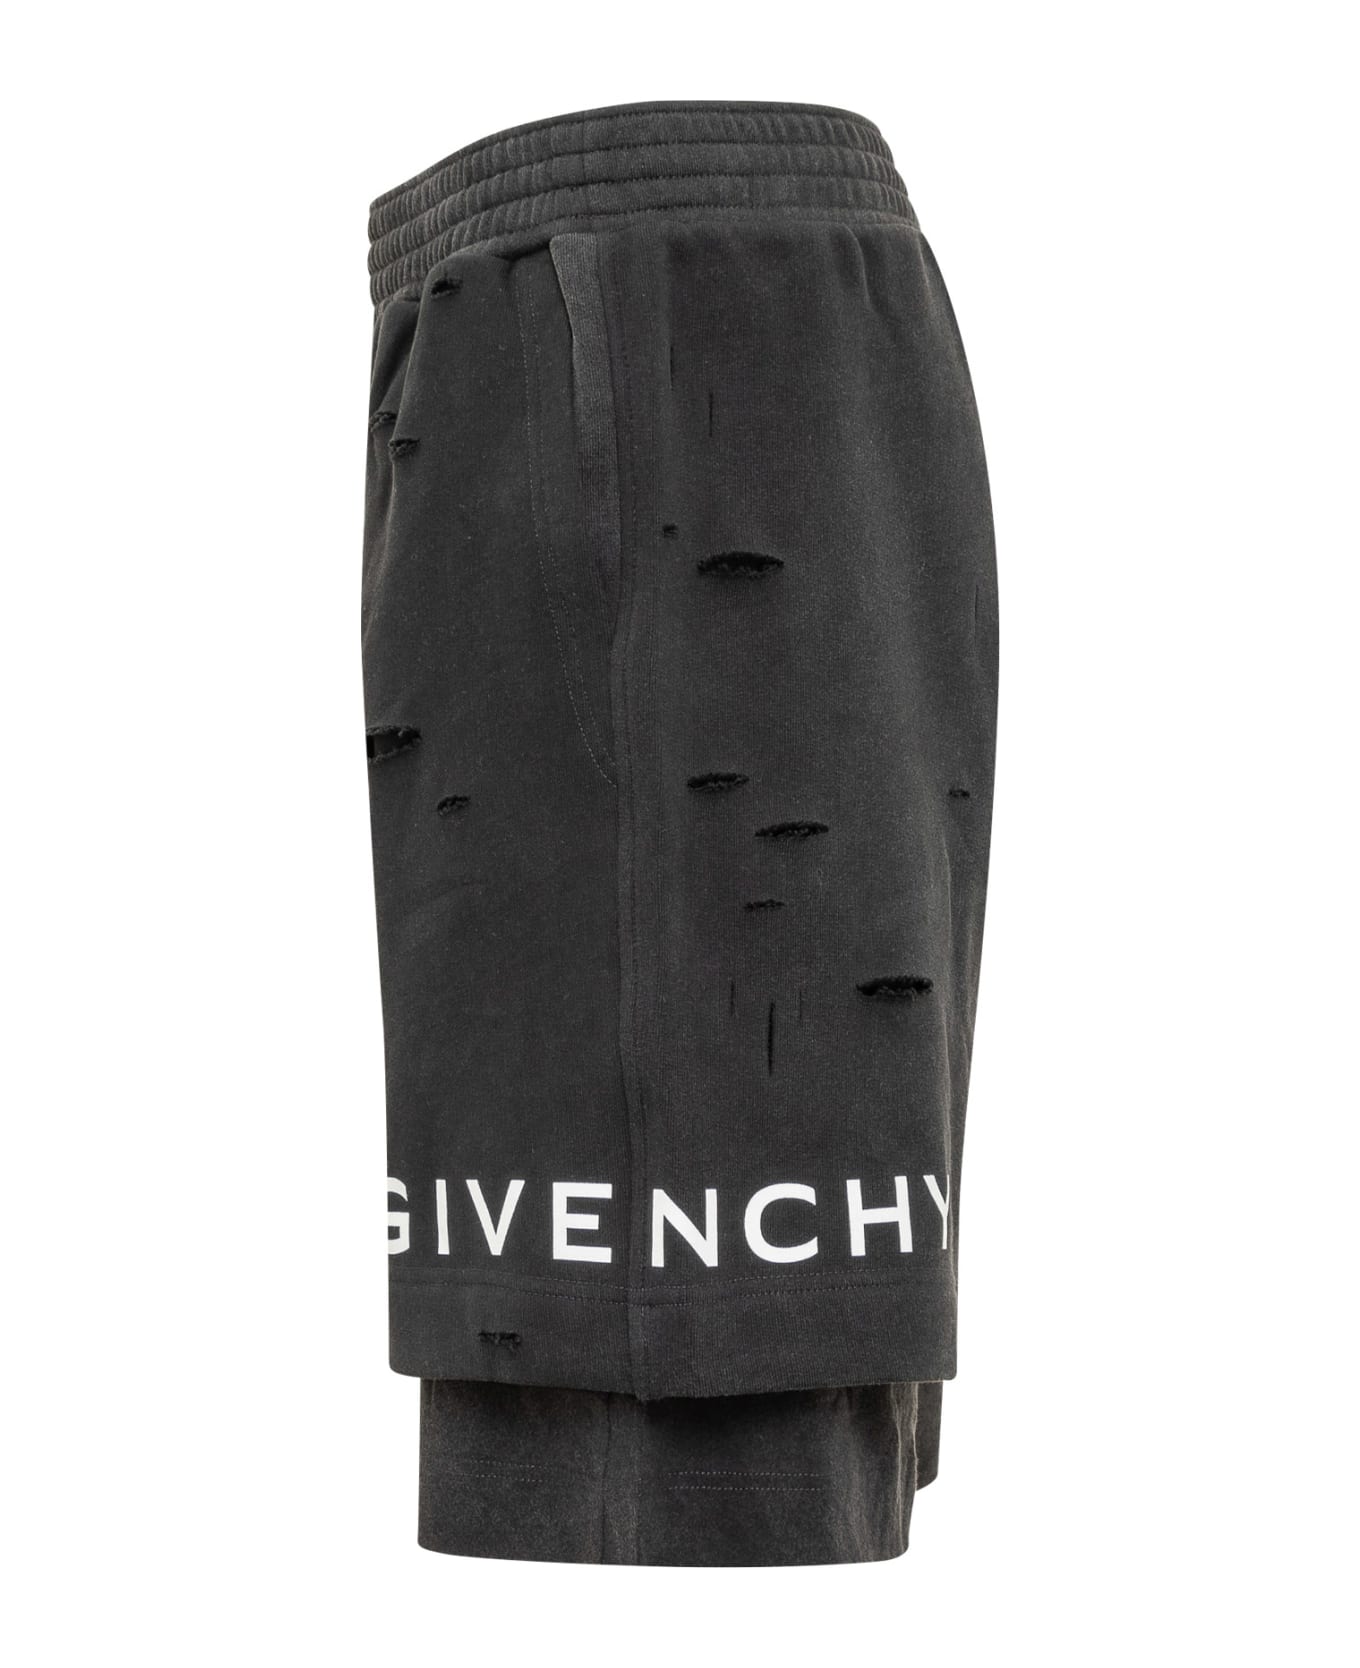 Givenchy Archetype Shorts - FADED BLACK